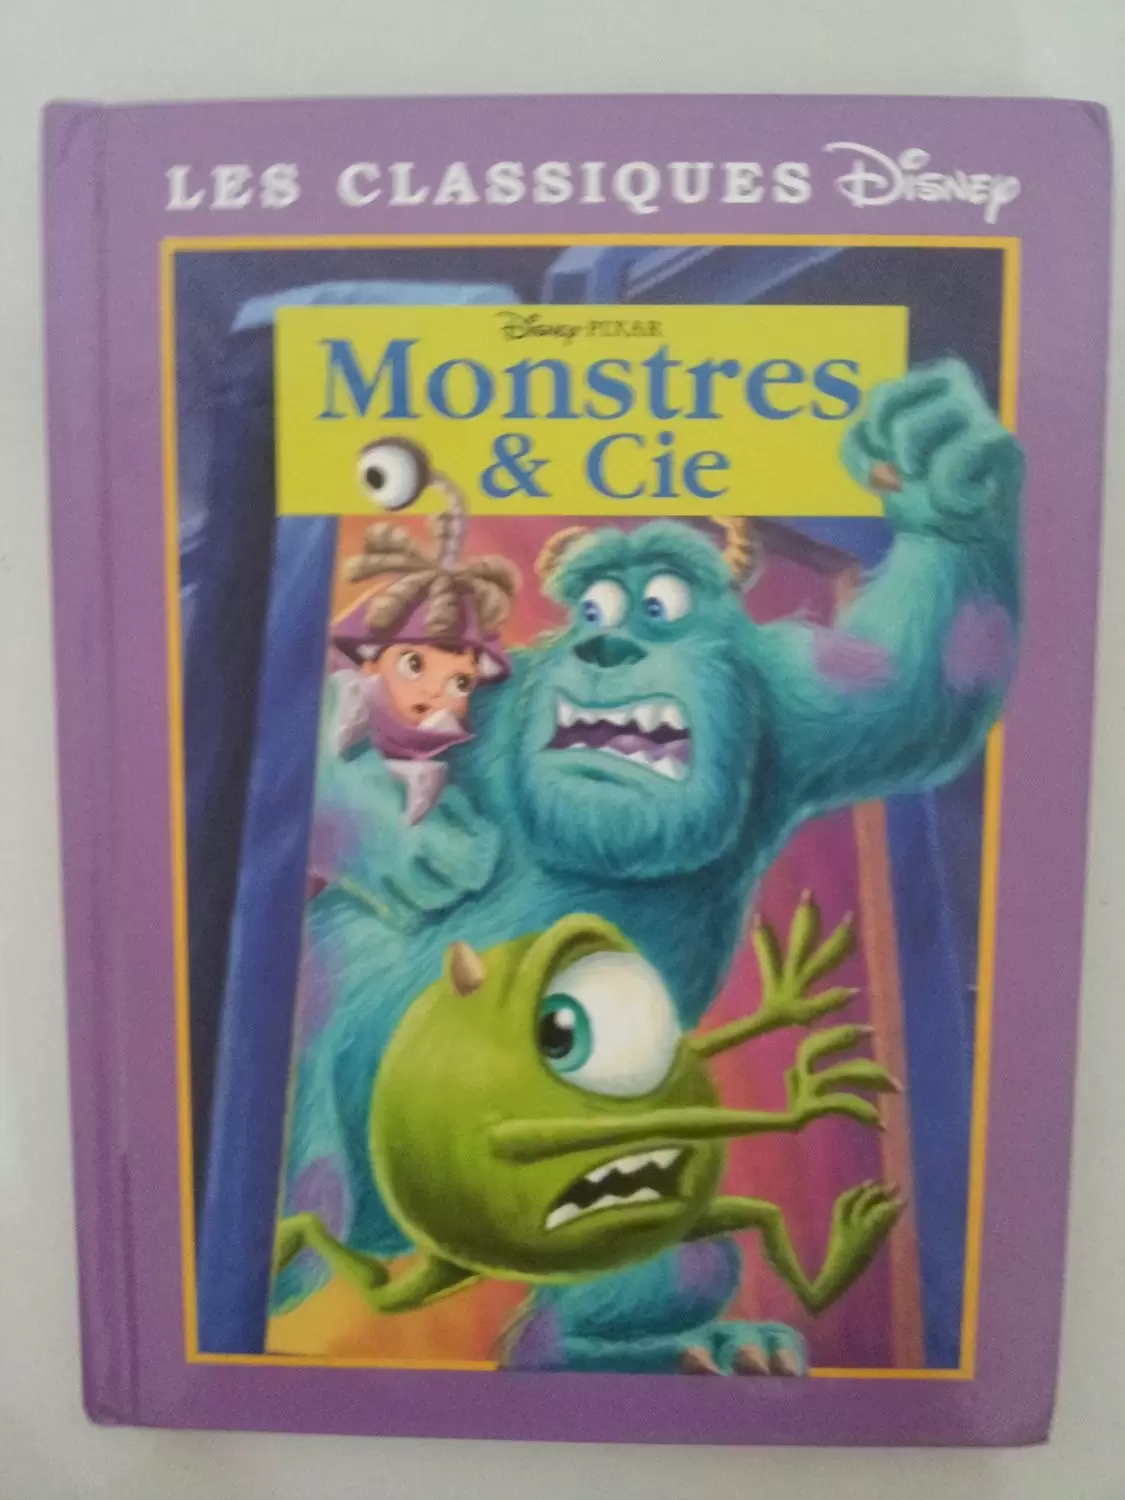 Les Classiques Disney - Edition France Loisirs - Monstres & Cie